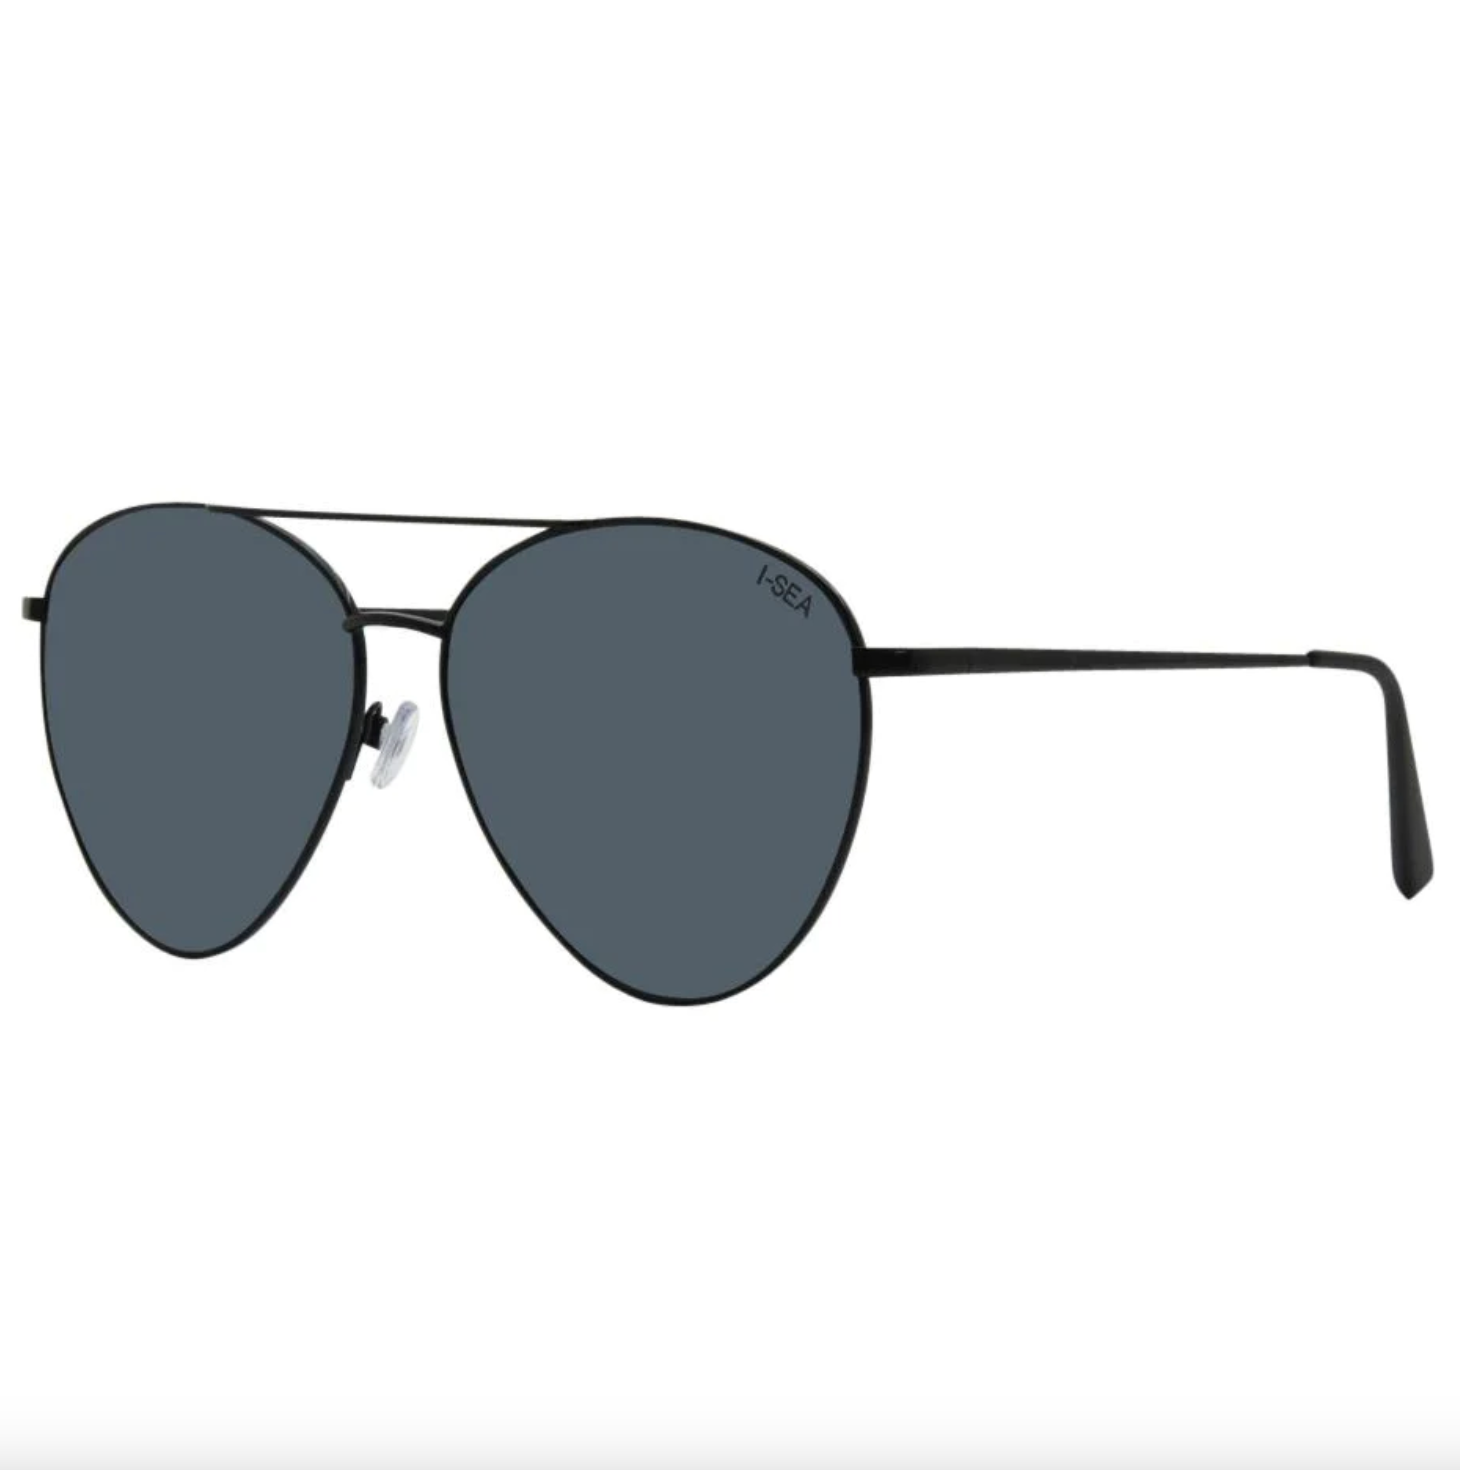 I-Sea Charlie Sunglasses Sunglasses in Black/Smoke at Wrapsody